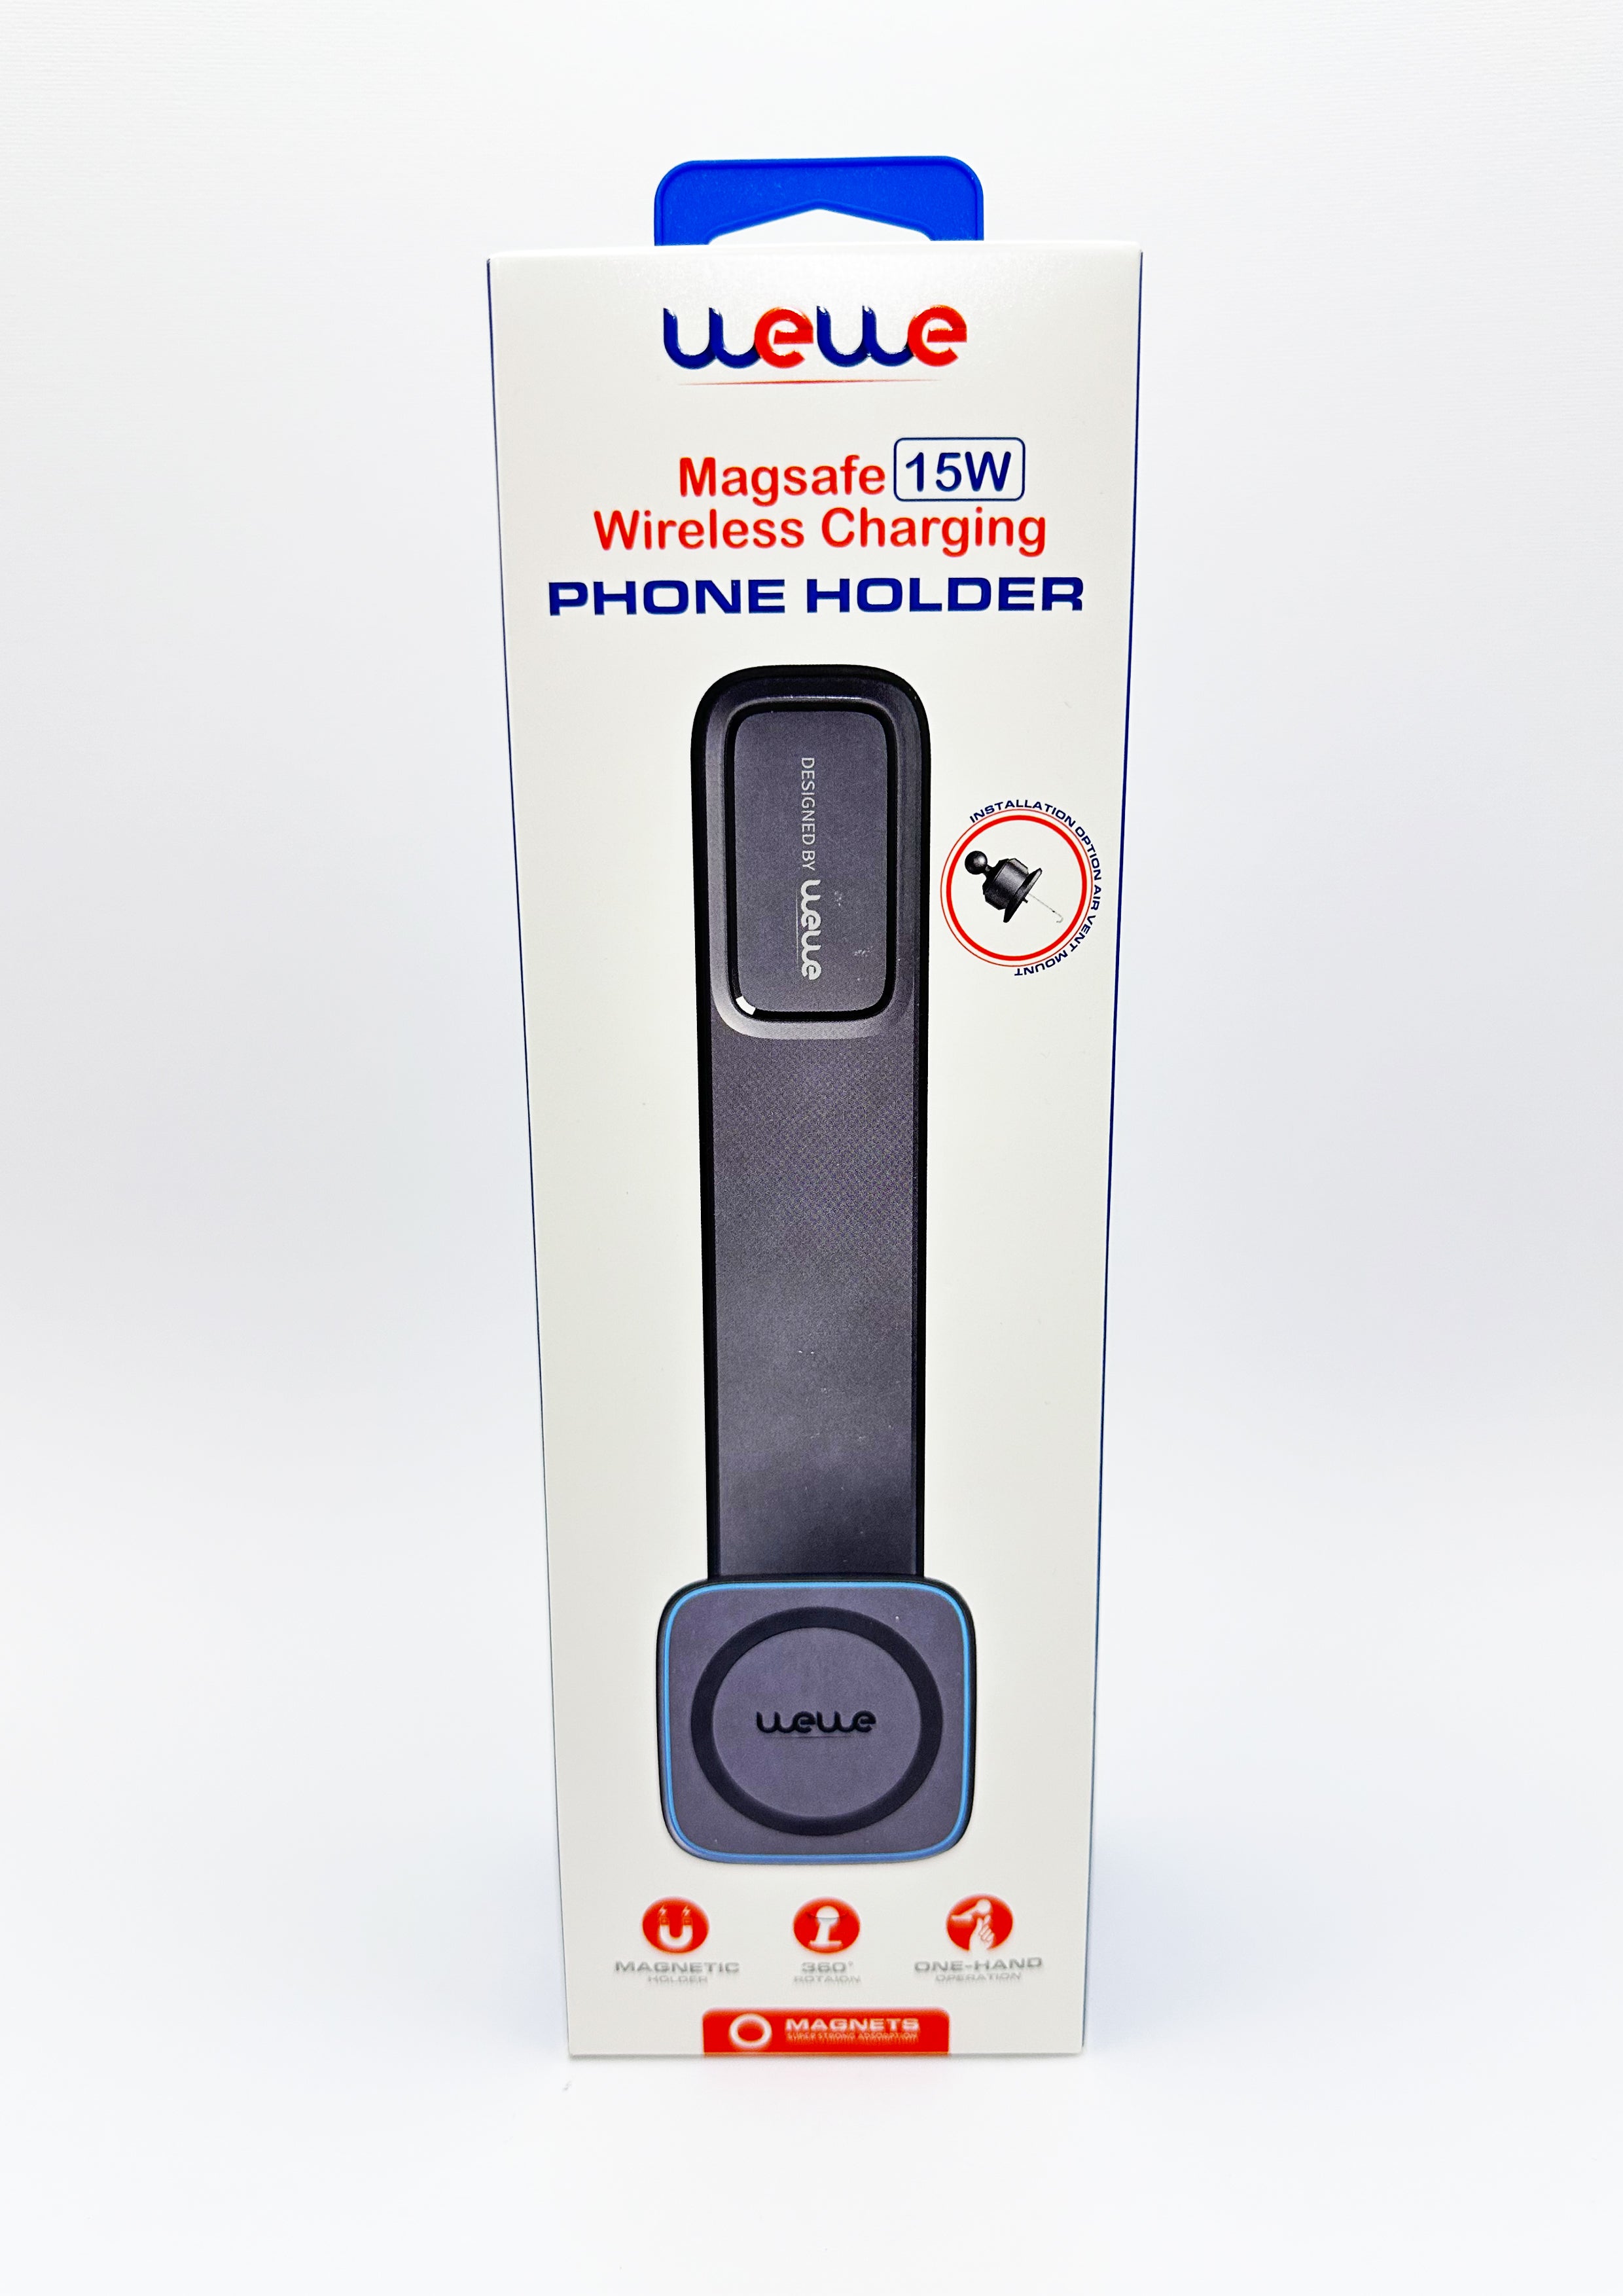 wewe magsafe 15w wireless charging ph-028